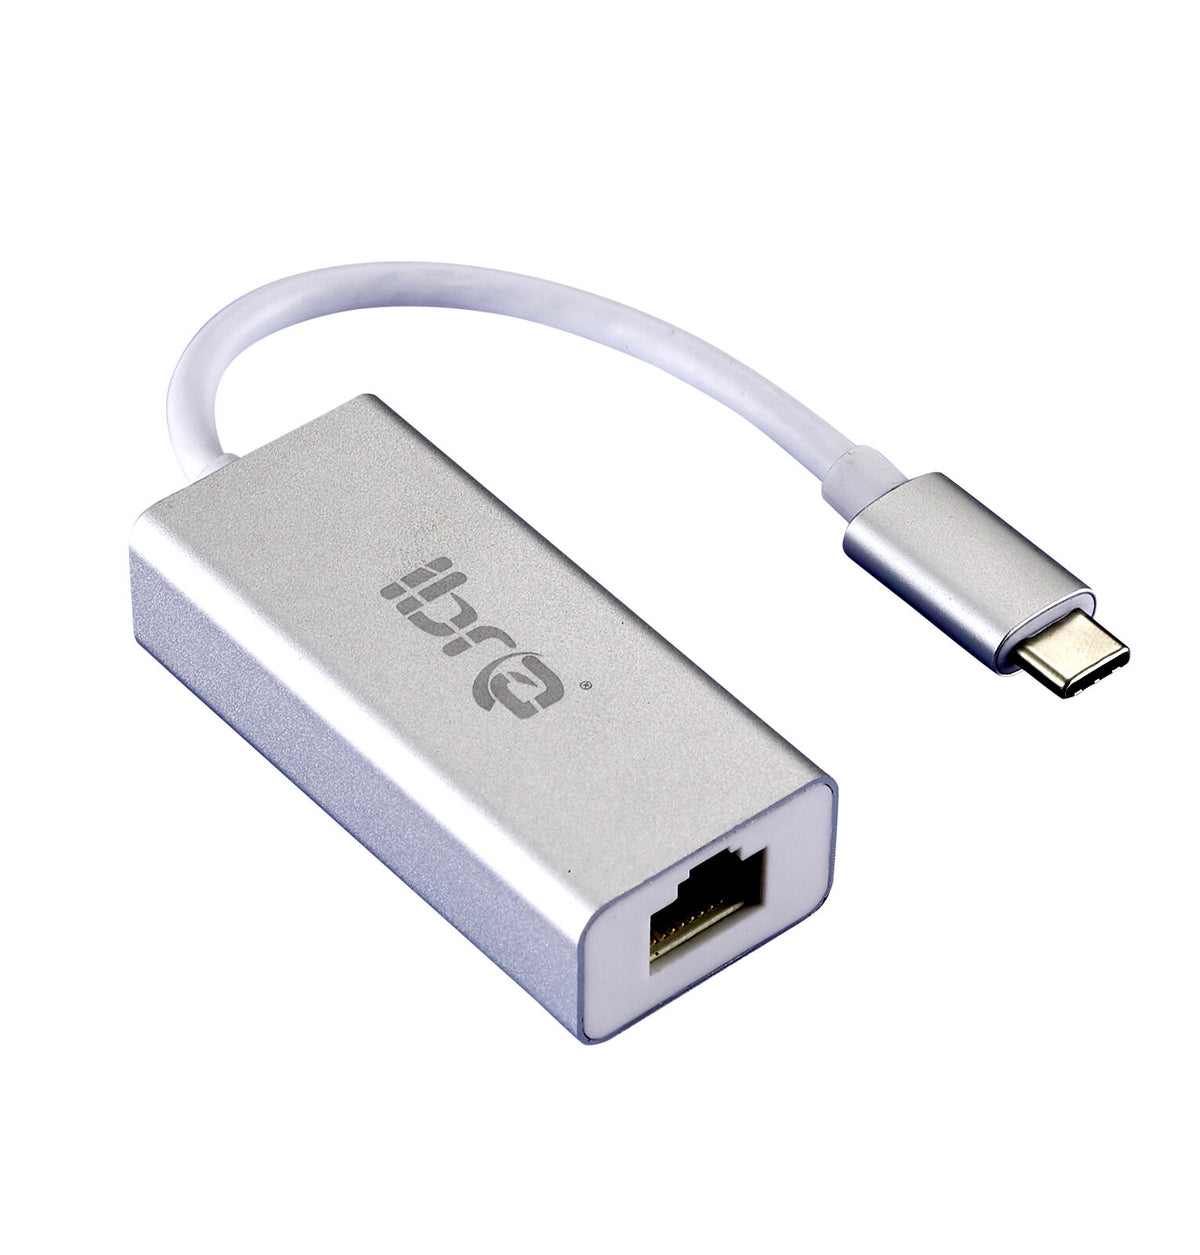 USB 3.1 Type C to RJ45 Gigabit Ethernet Adapter for Apple Macbook - 0.15M